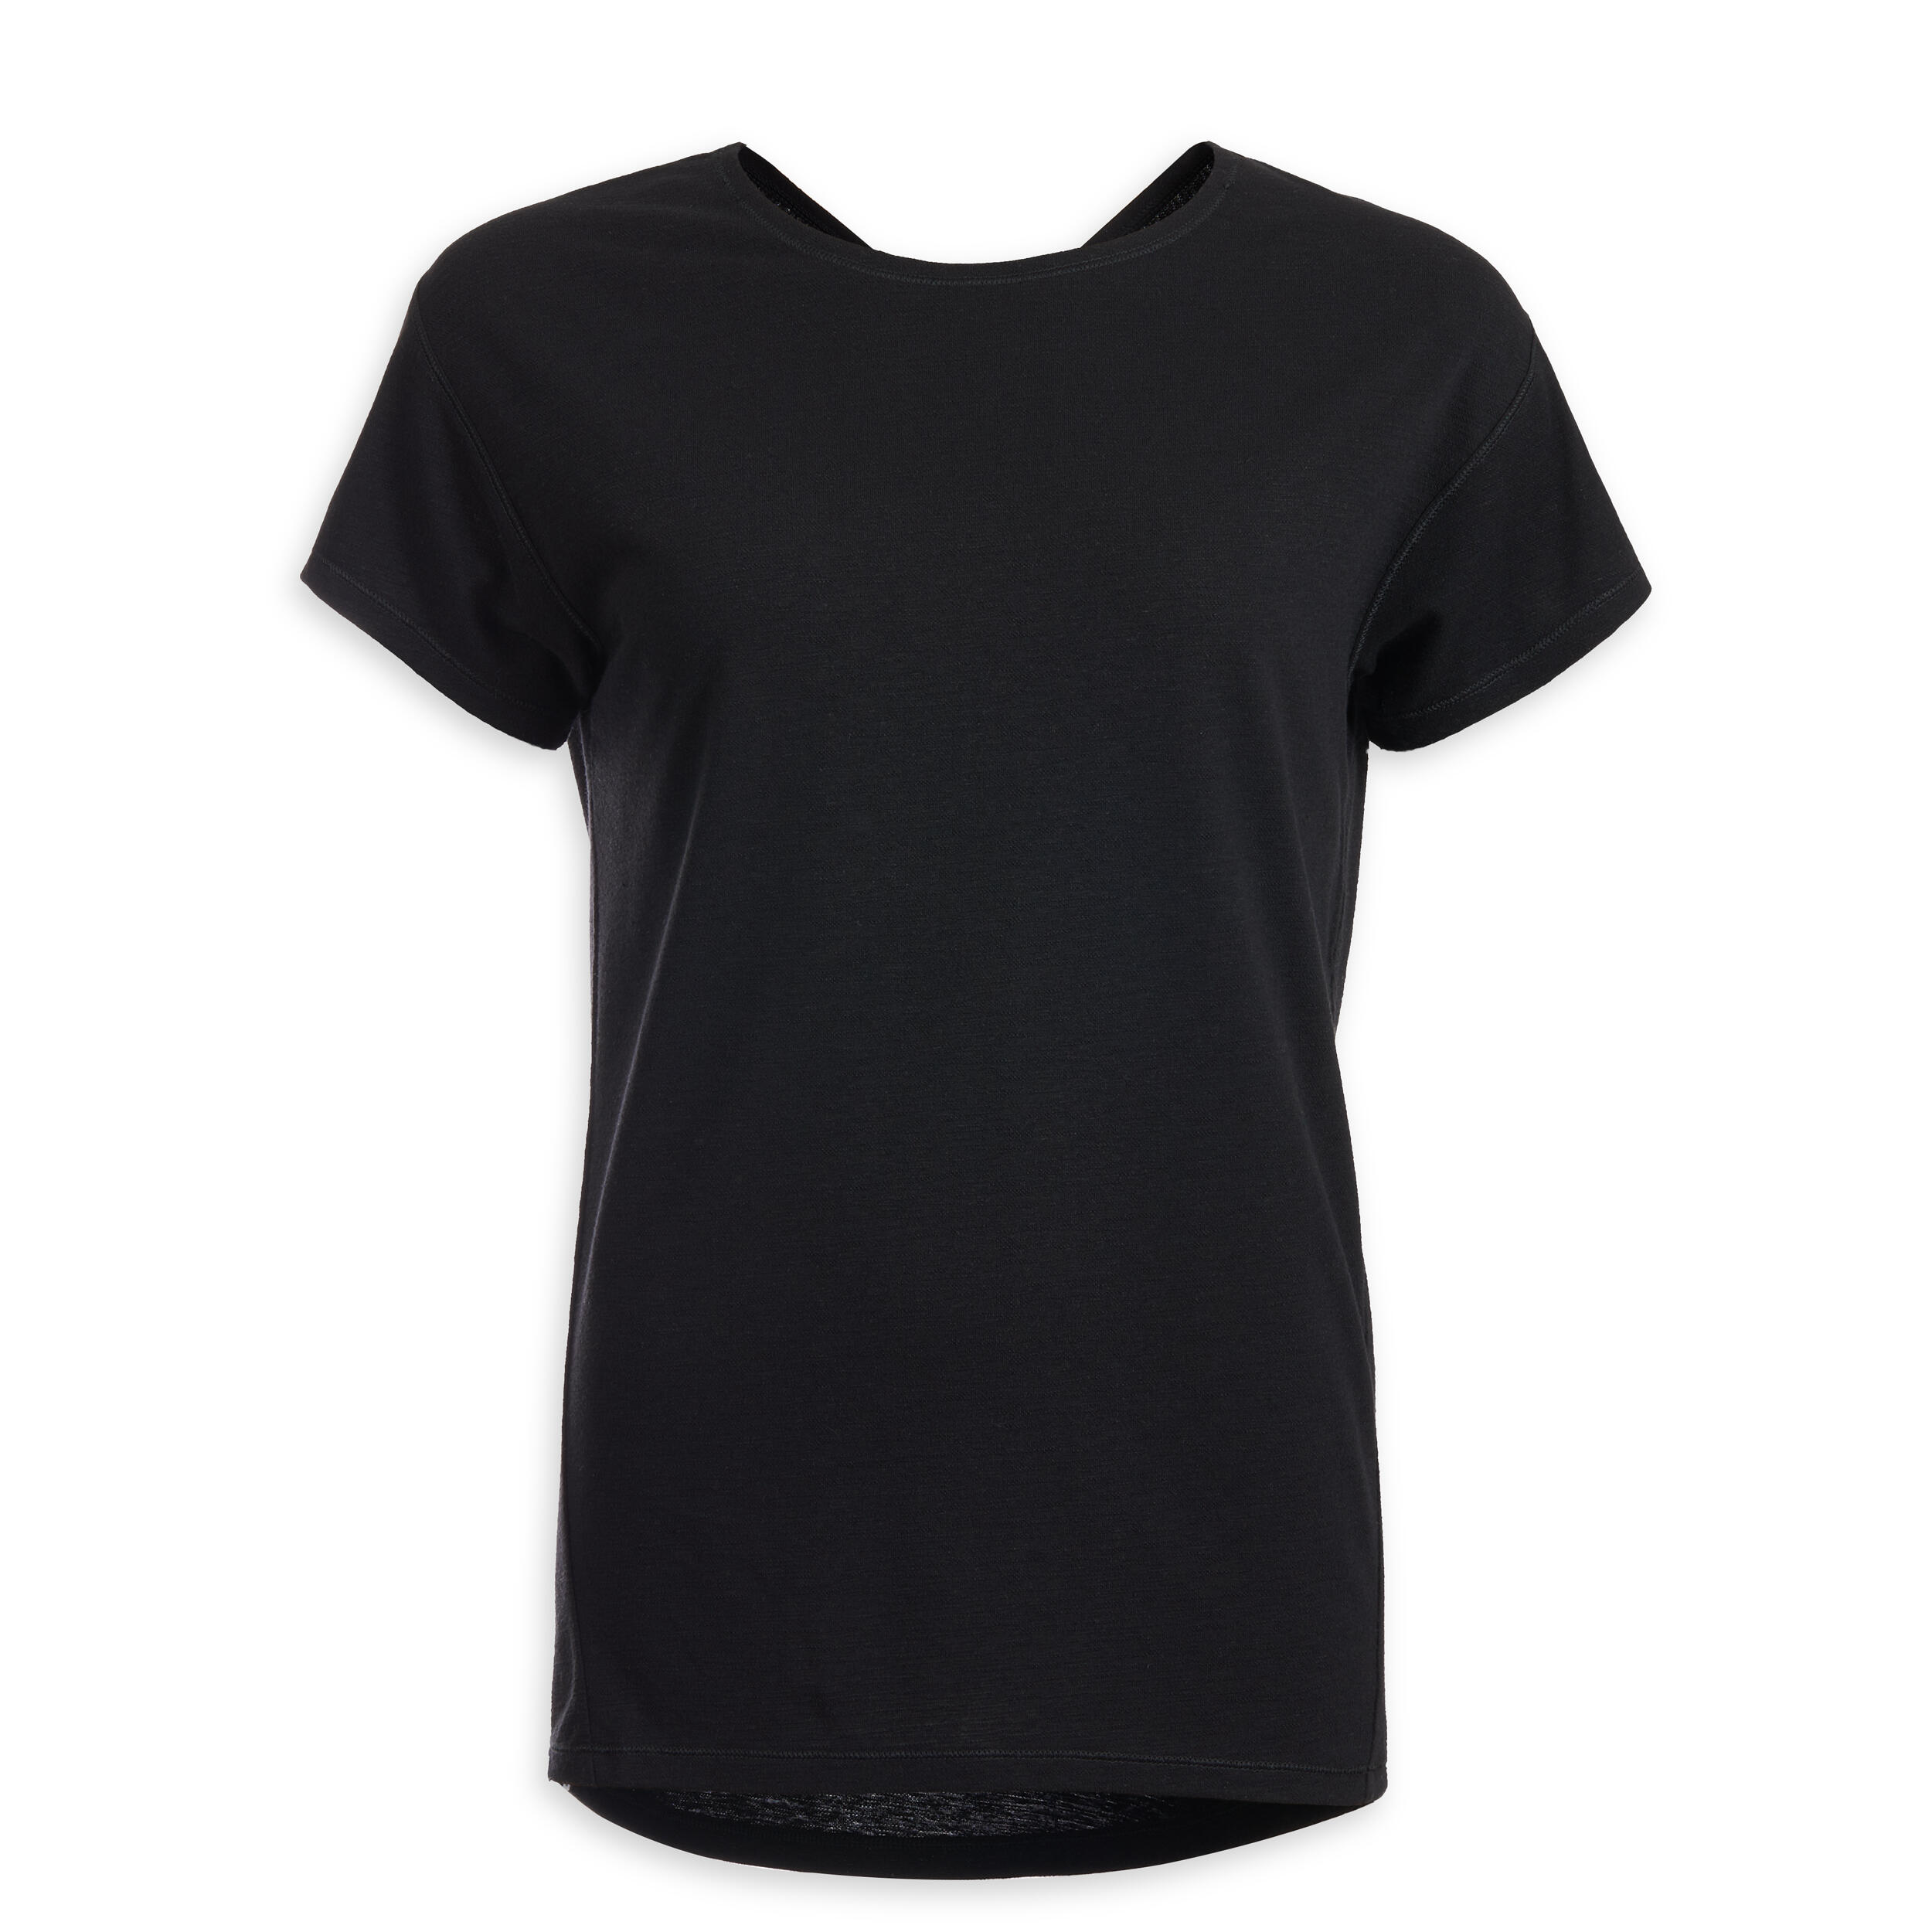 Women's Gentle Yoga T-Shirt - Black 6/6